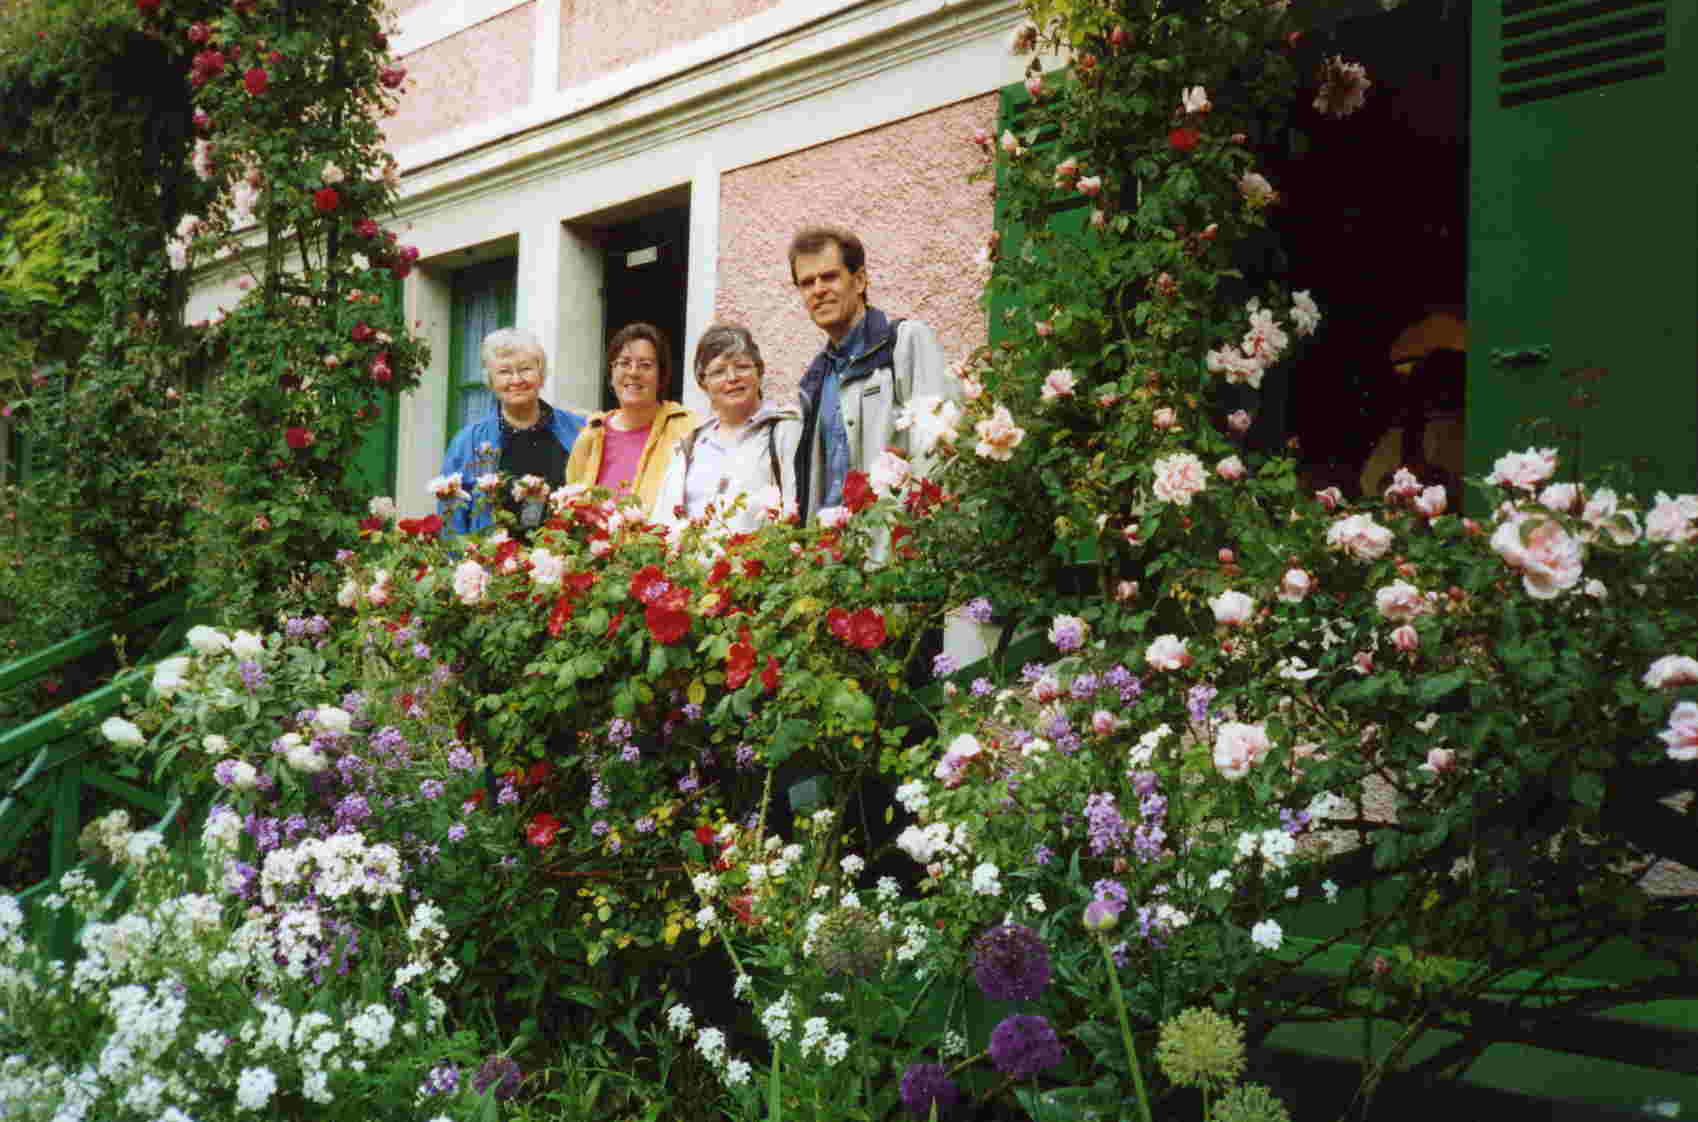 Musicians in 'plain' clothes enjoying Monet's garden